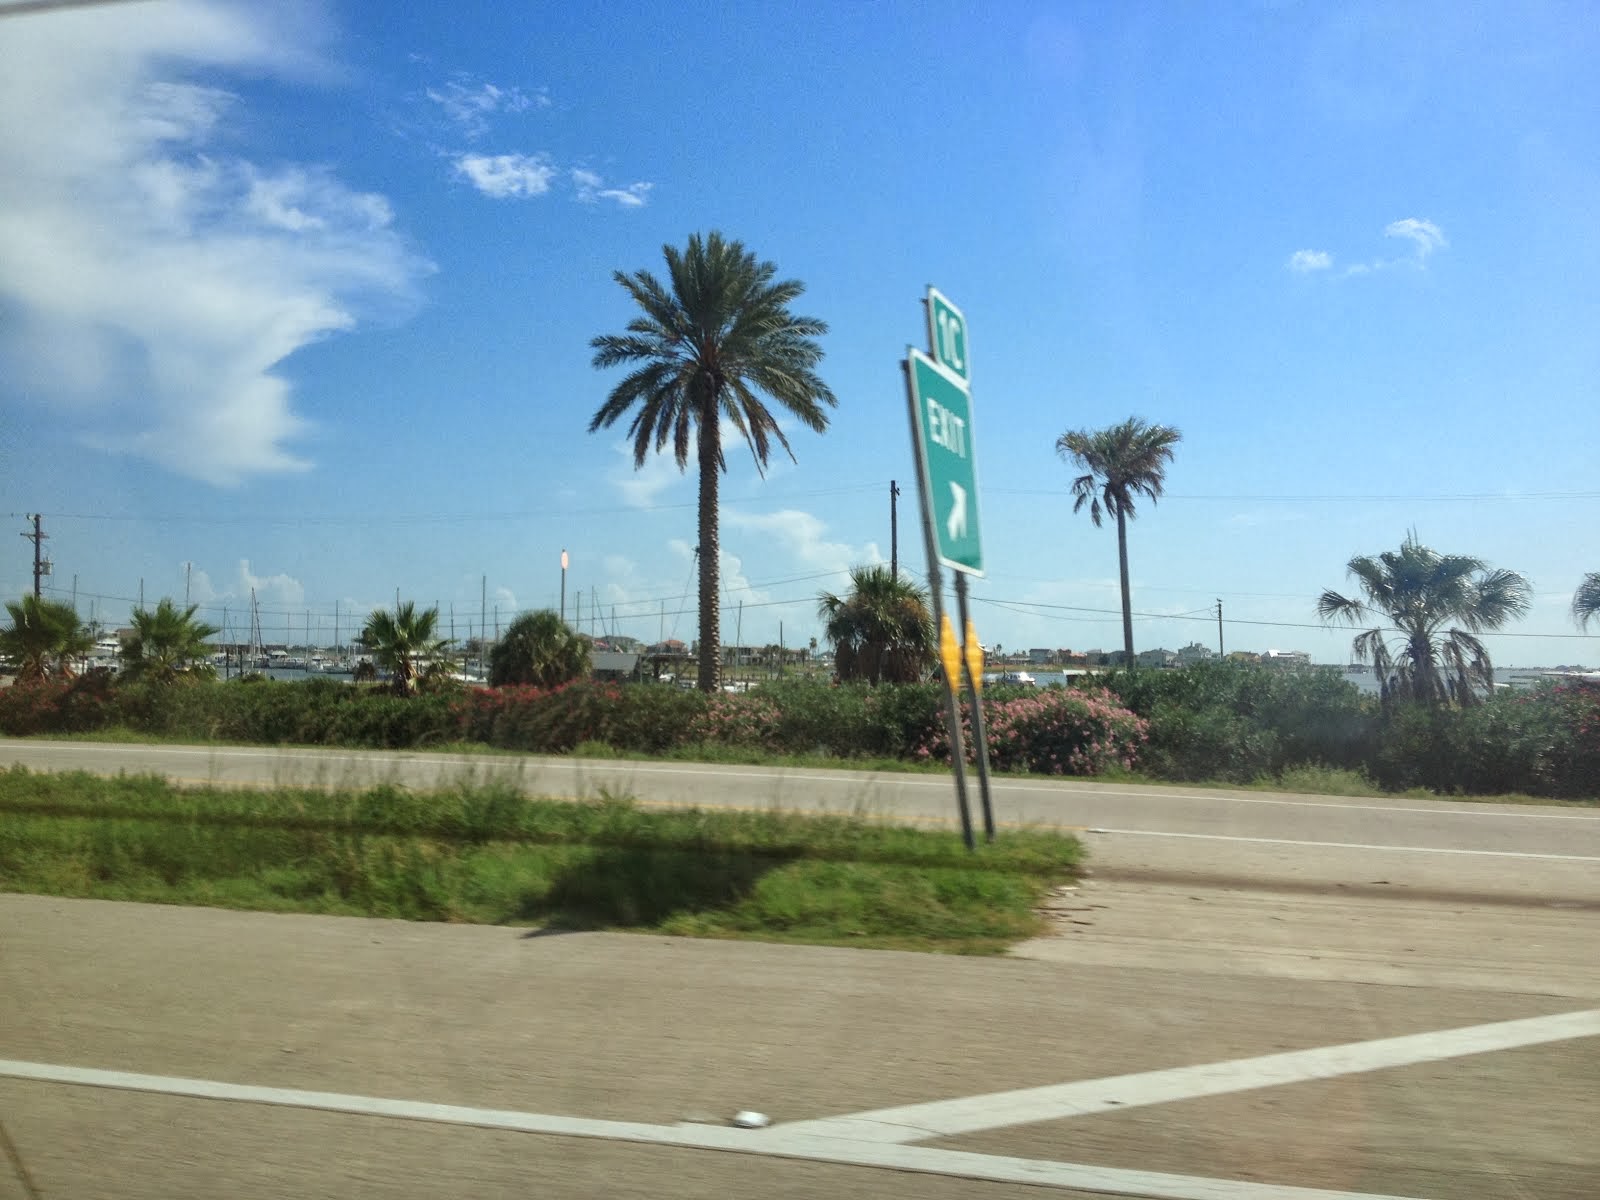 Galveston